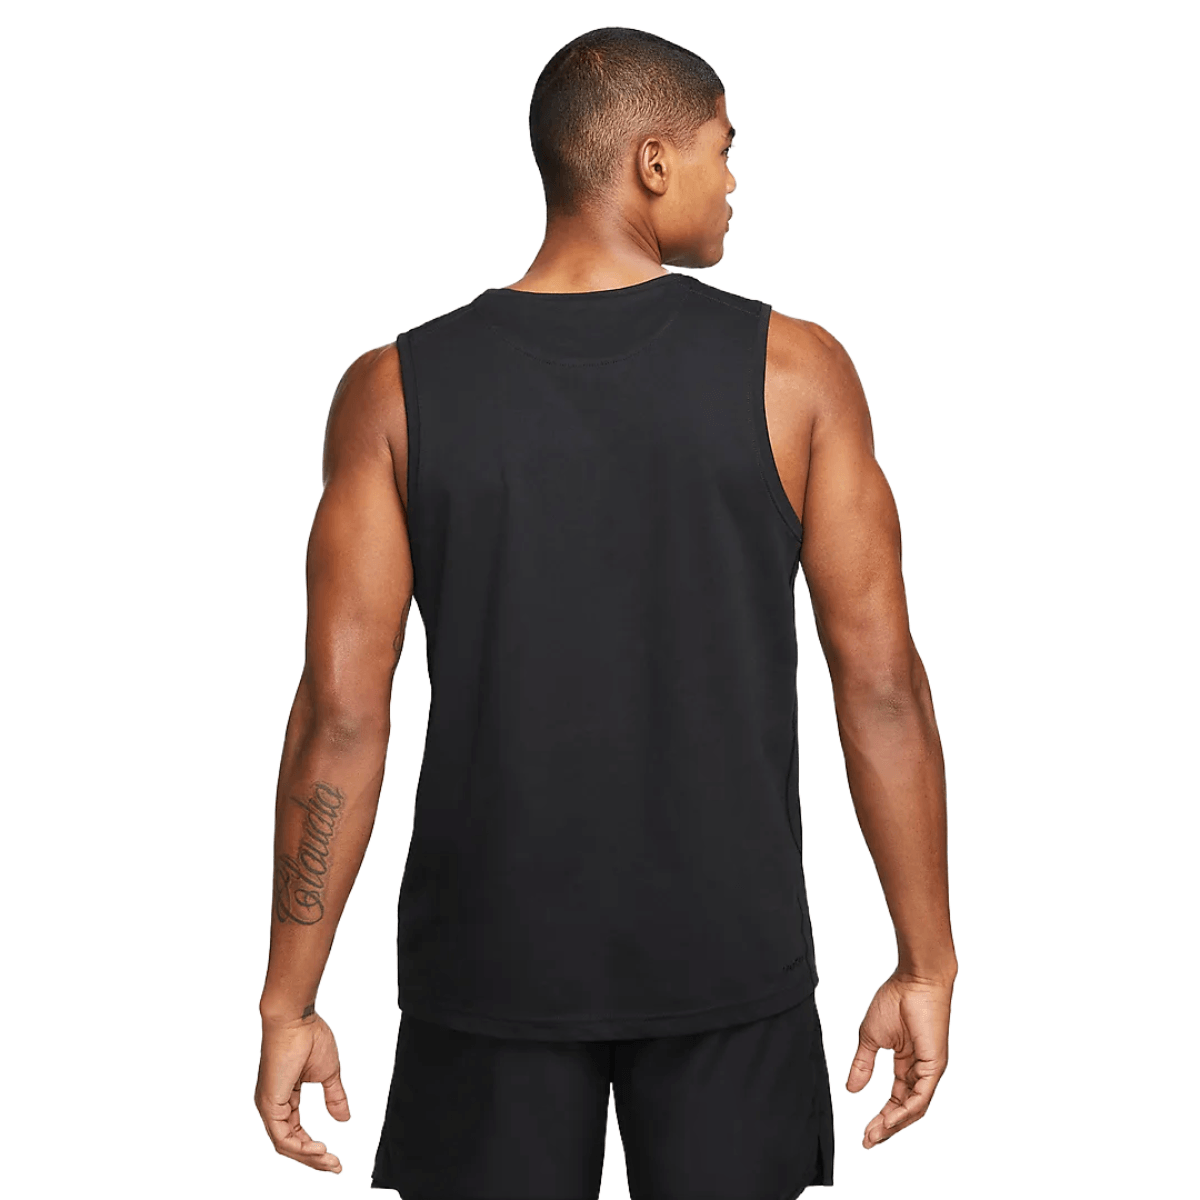 Nike Men's Tank Top - Black - S